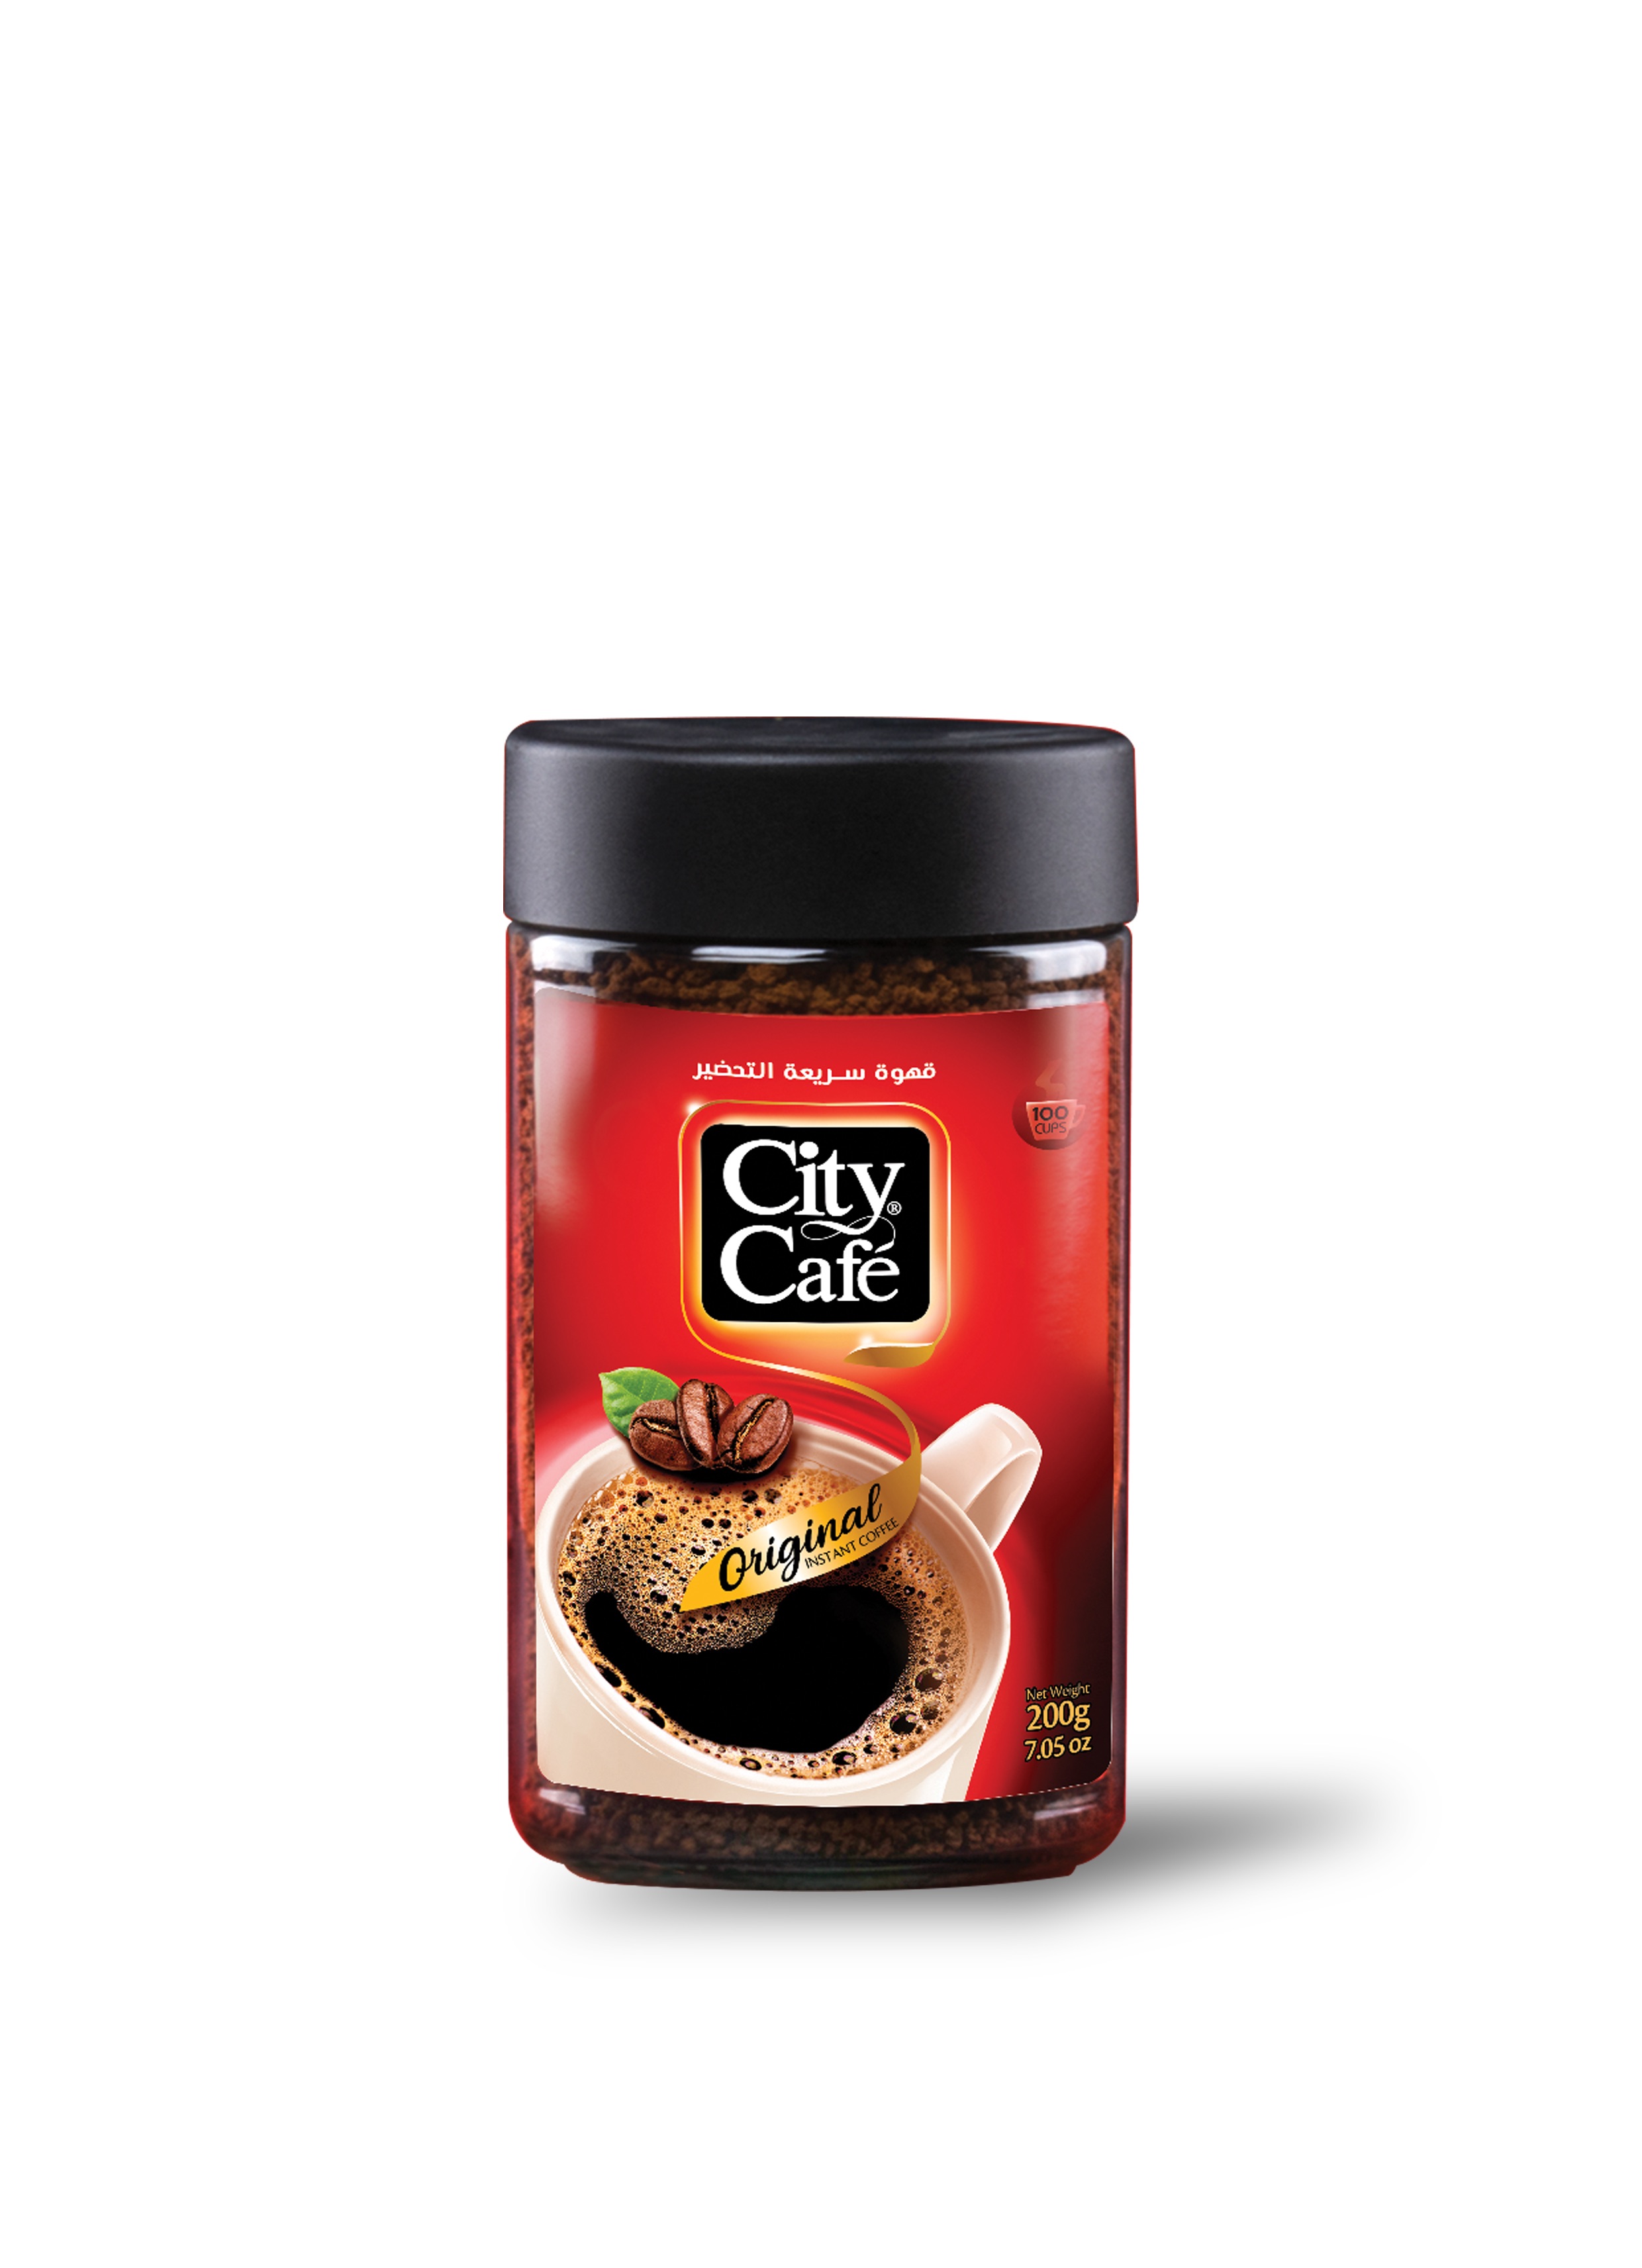 City café - Instant Coffee - Black